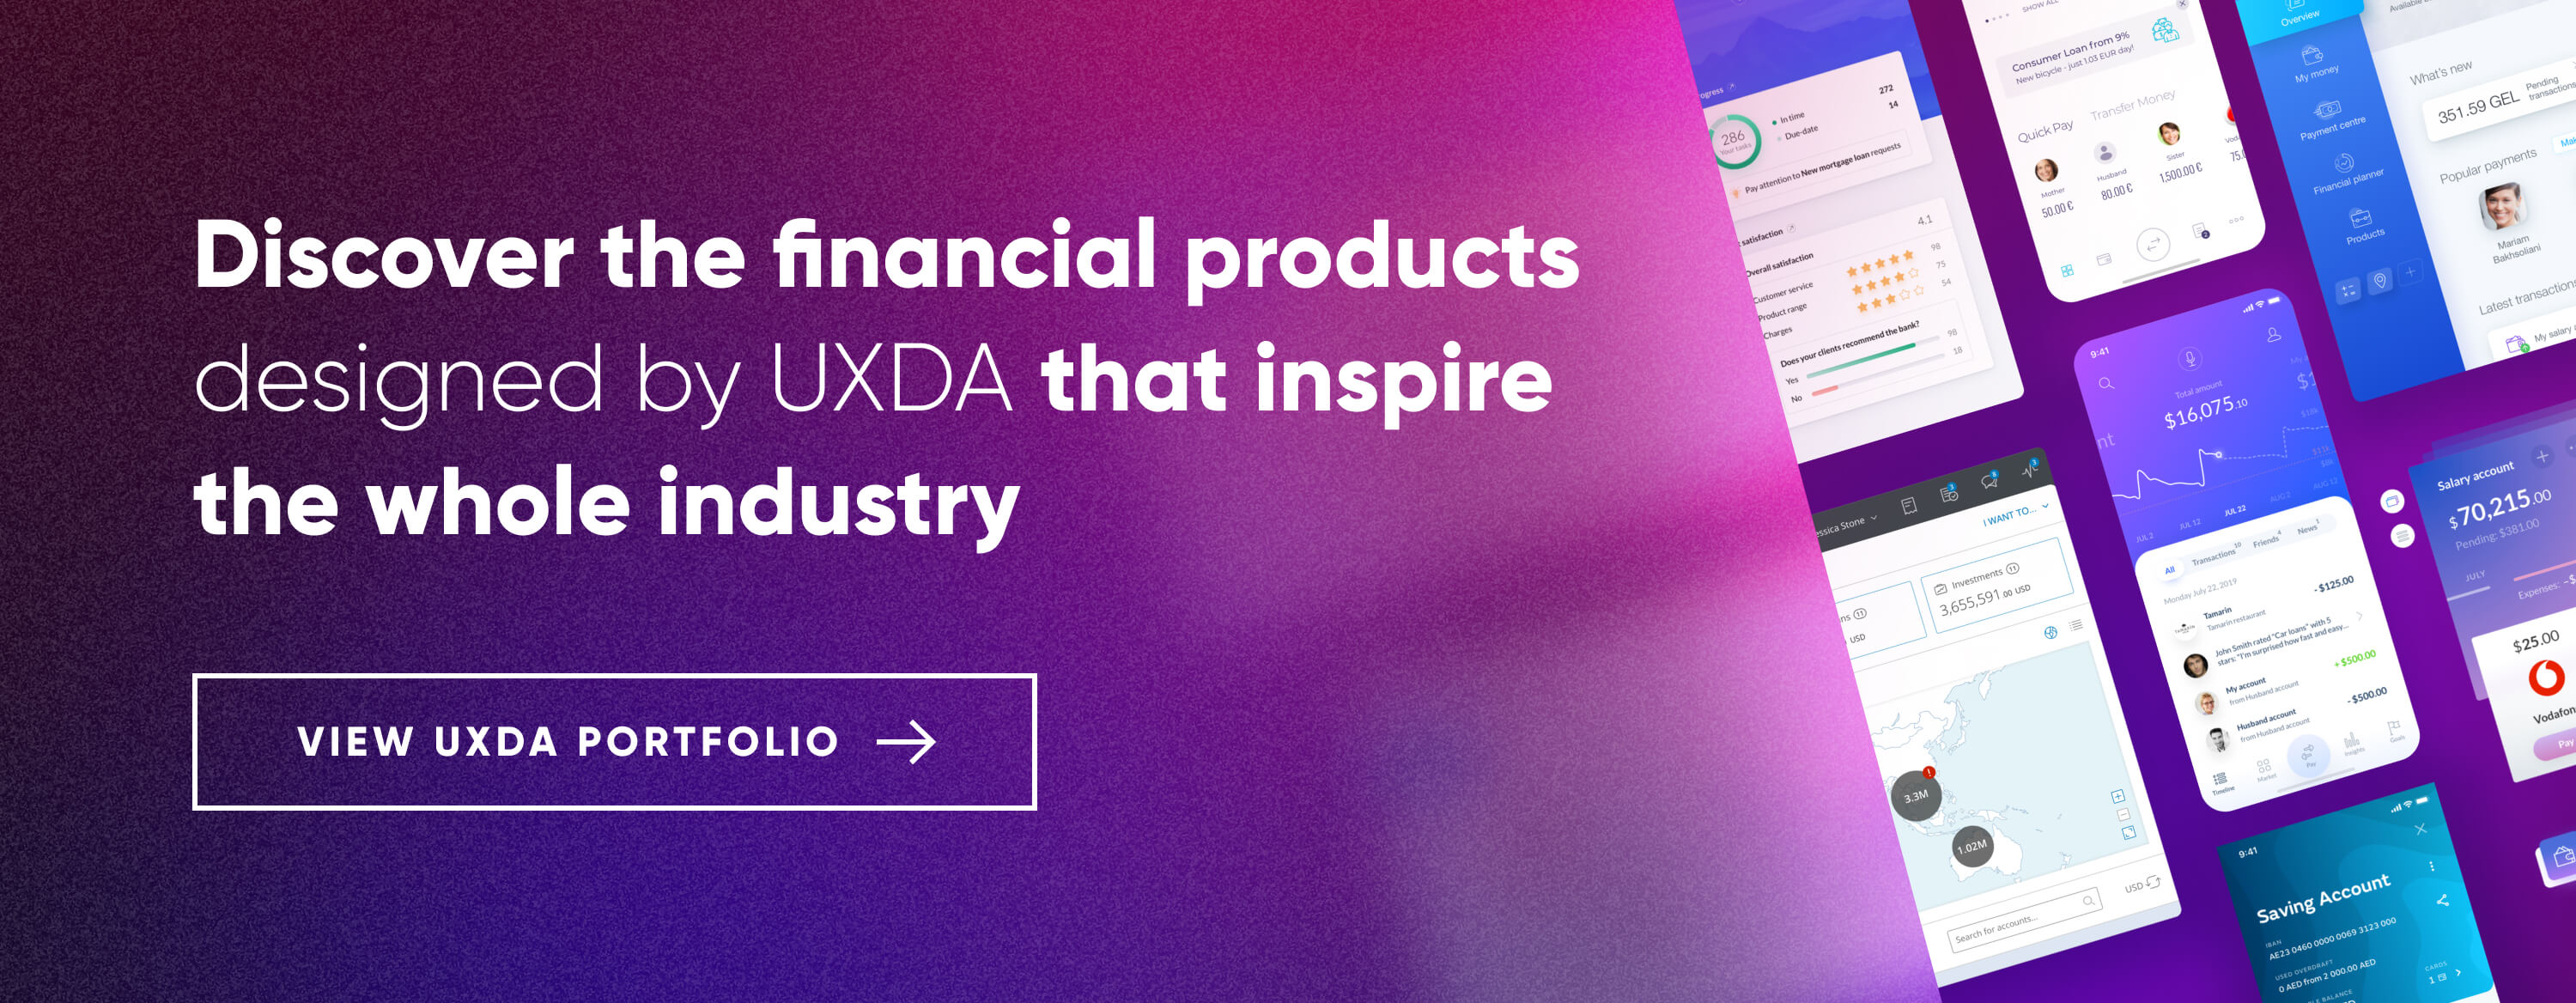 uxda-portfolio-financial-digital-product-inspire-industry-ux-1669632109.jpg